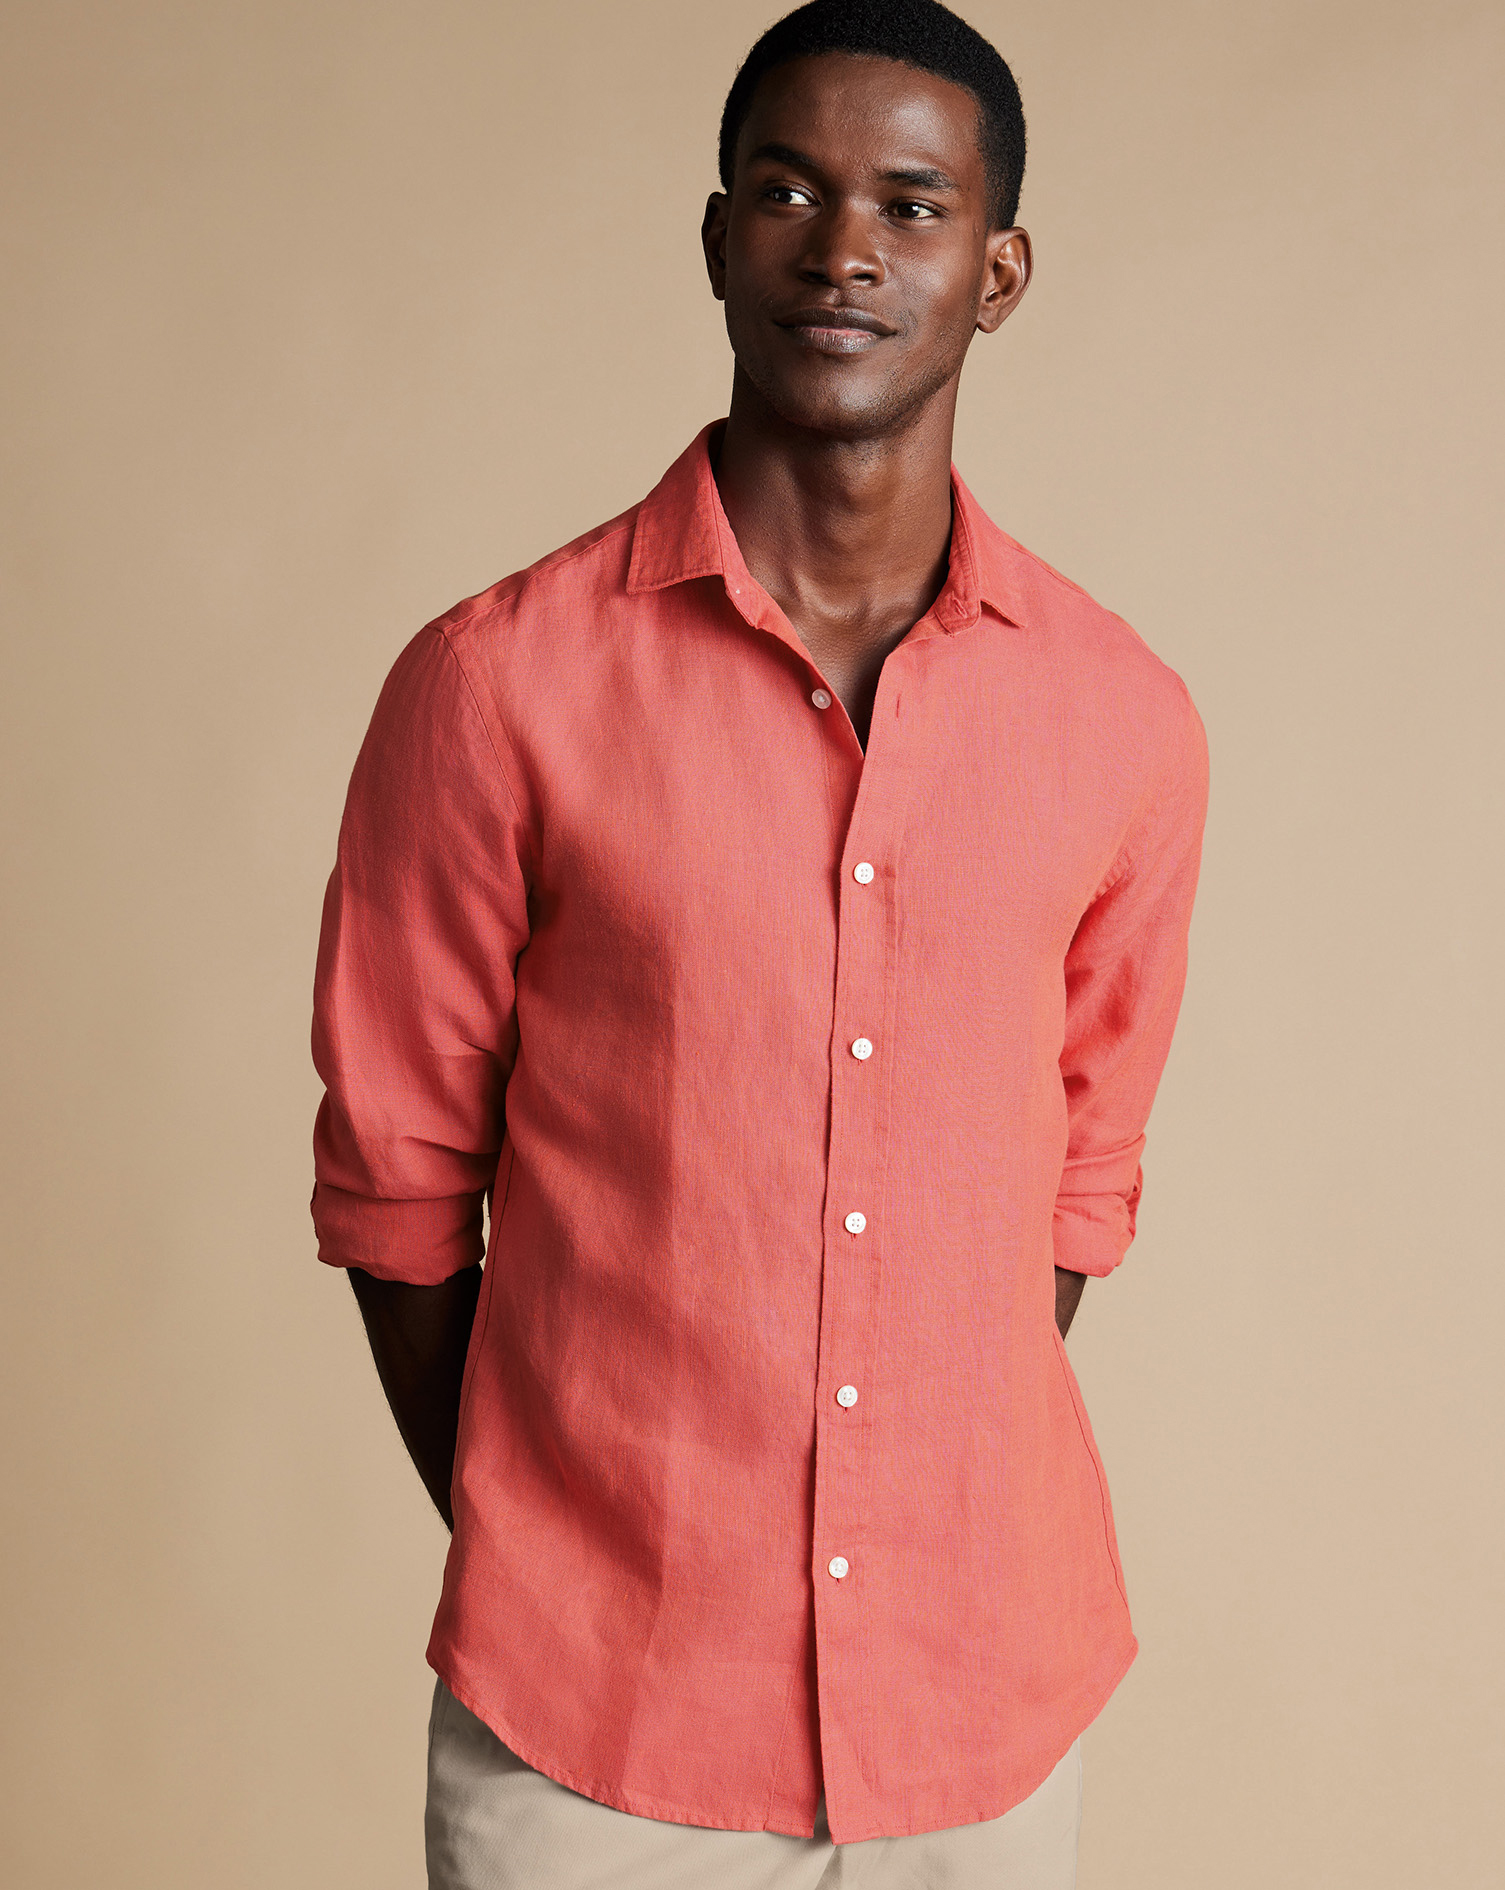 Men's Charles Tyrwhitt Pure Casual Shirt - Coral Pink Size XXL Linen
